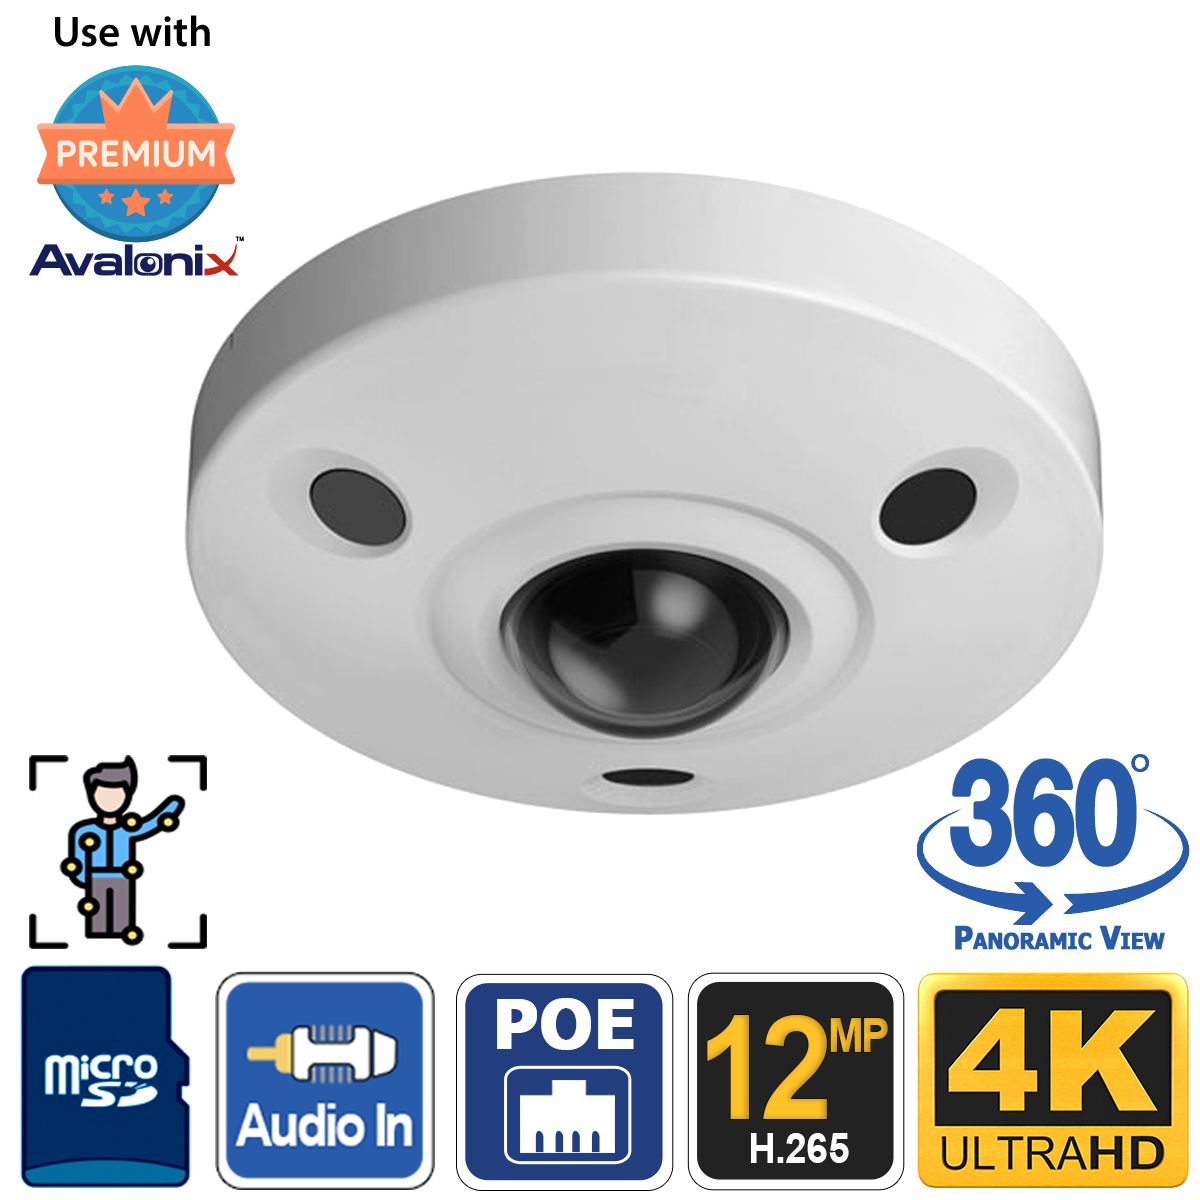 IP6F - 6MP Fisheye Security Camera: 360-degree IP Camera with Audio